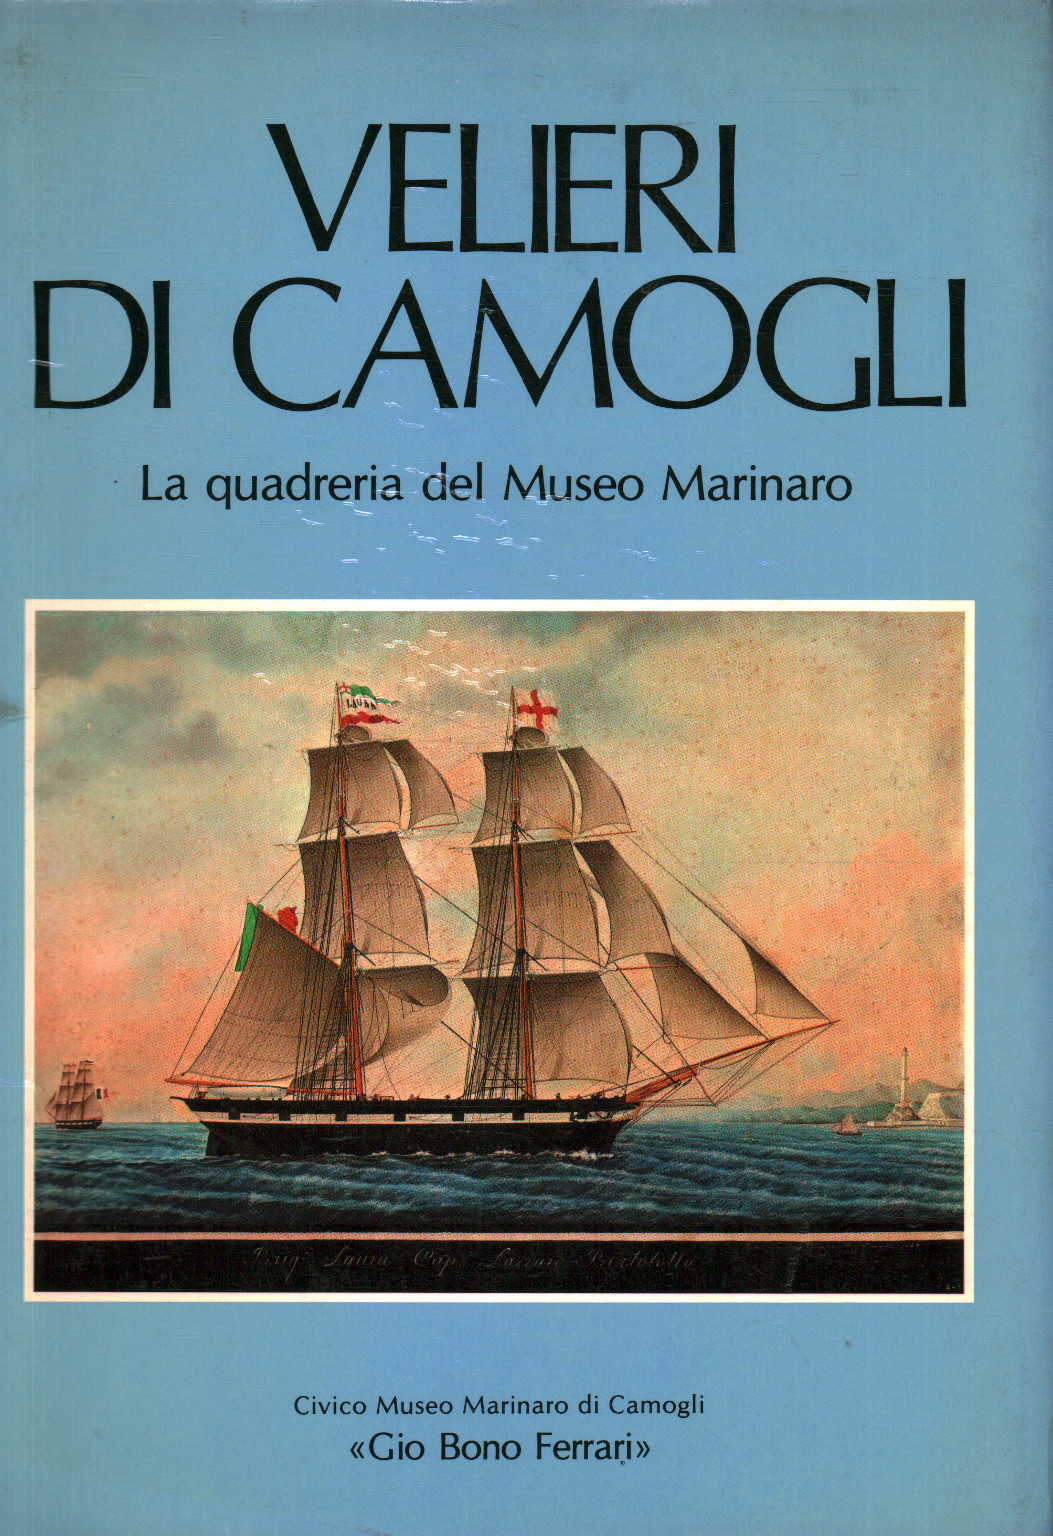 Camogli sailing ships, Civic Maritime Museum of Camogli «Gio Bono Ferrari»